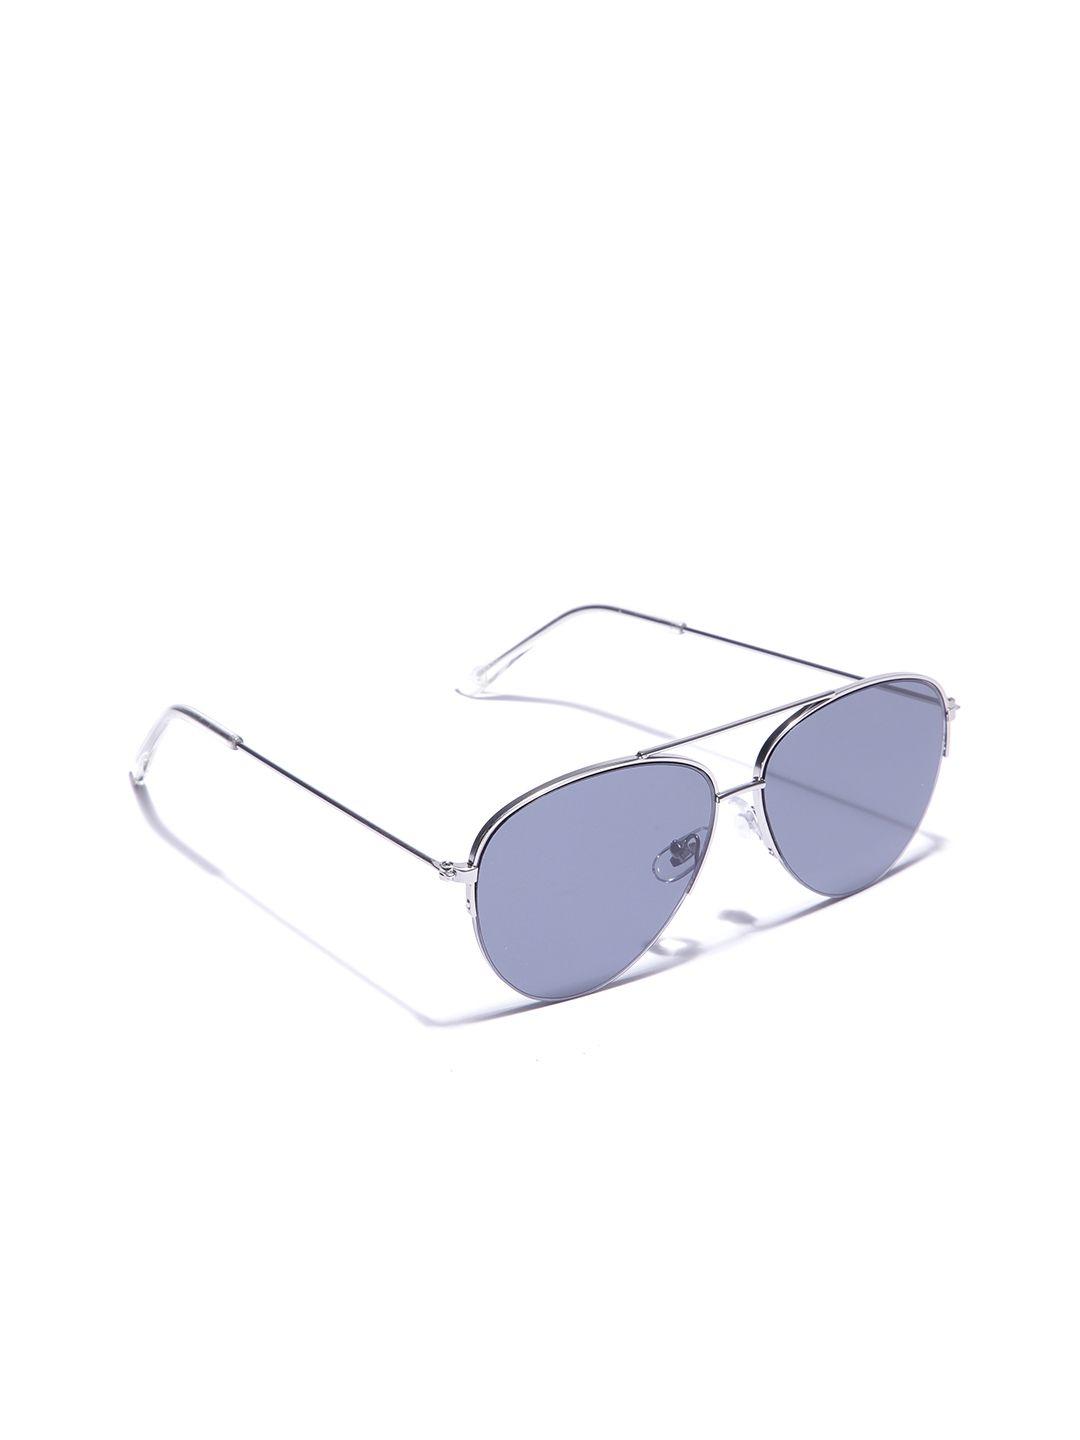 carlton london boys grey lens & silver-toned uv protected lens aviator sunglasses clsb241